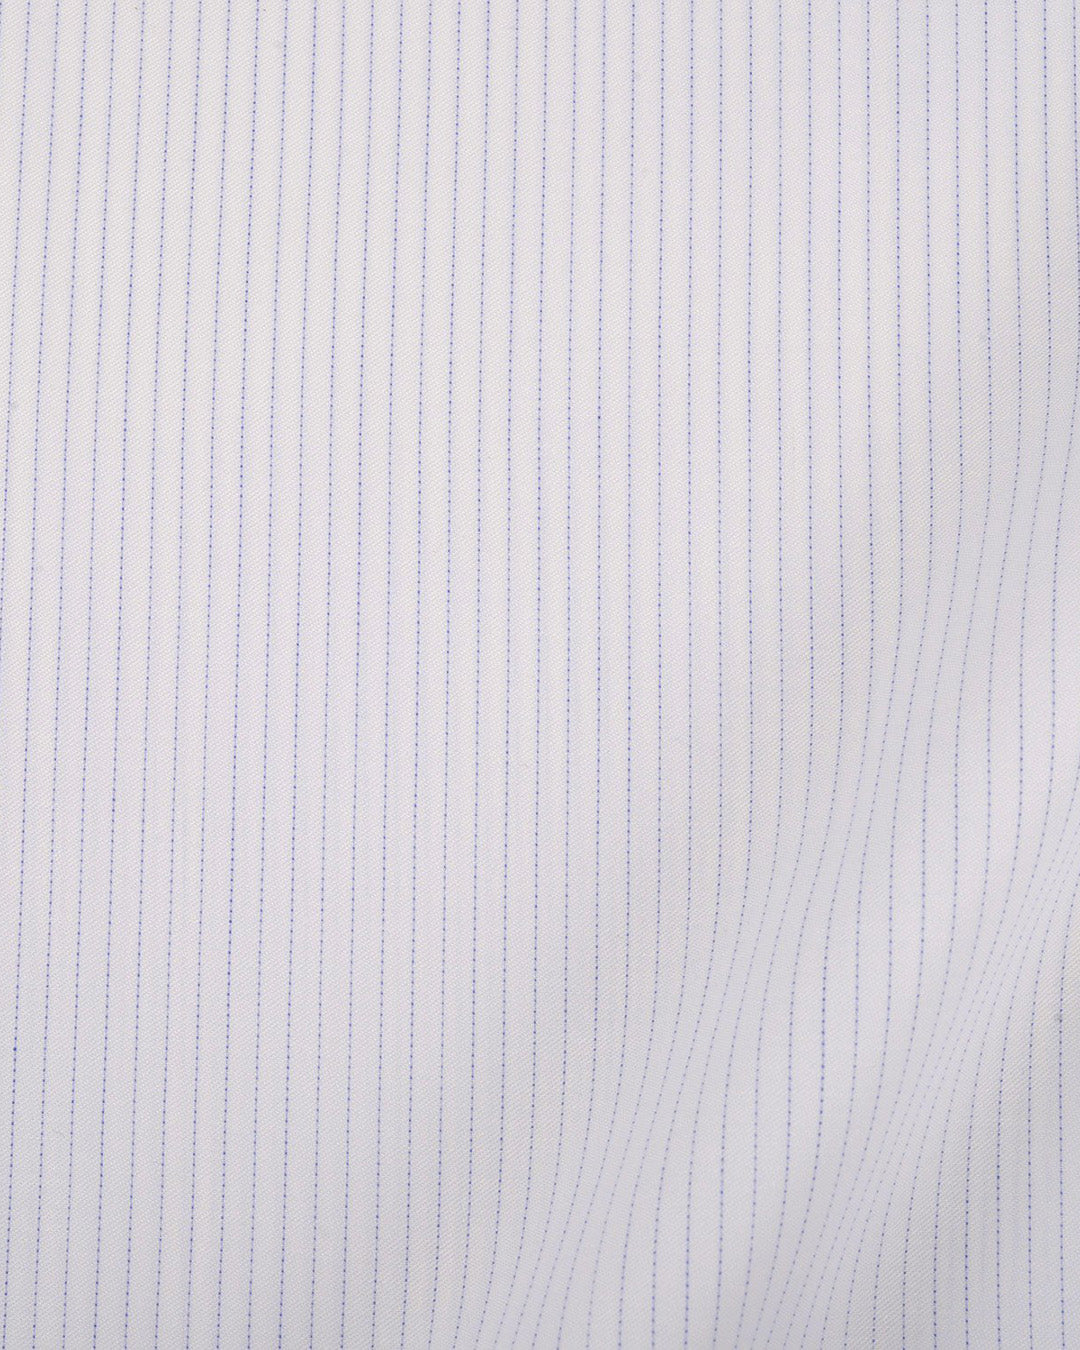 Brembana White Chalk stripes Shirt